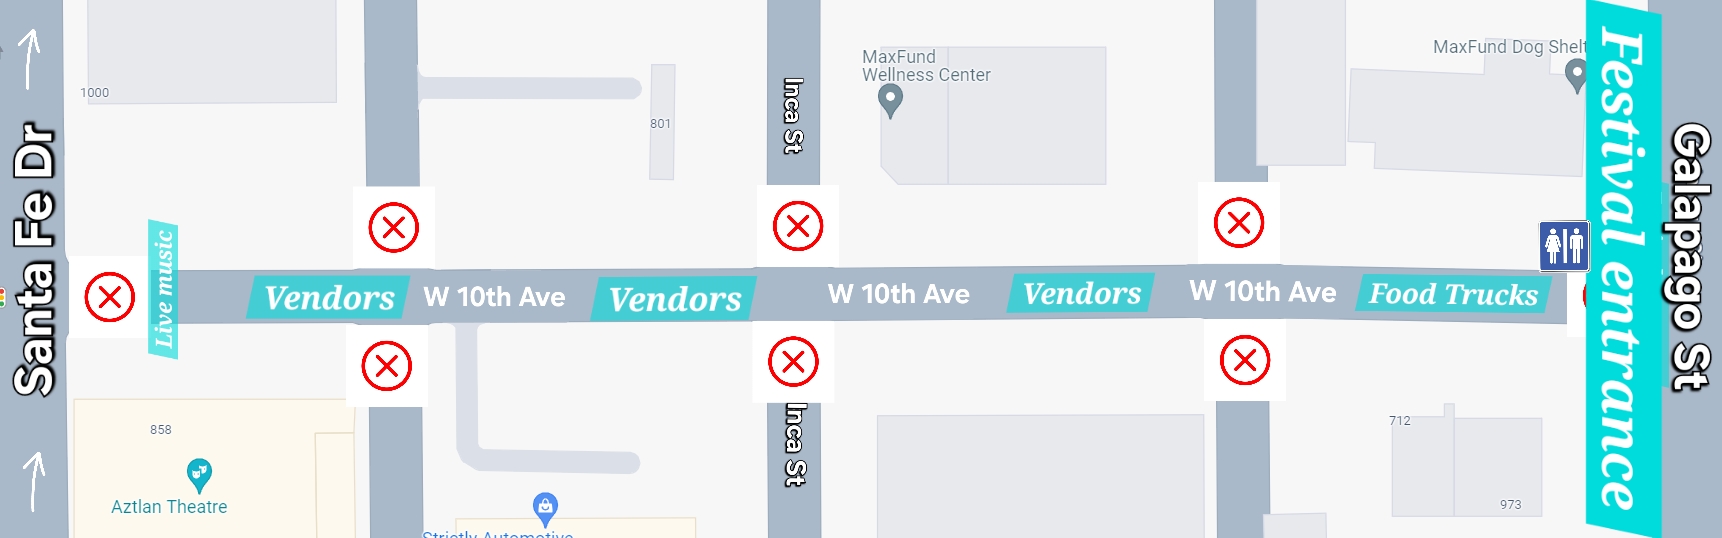 Site Map of Denver Street Fairs